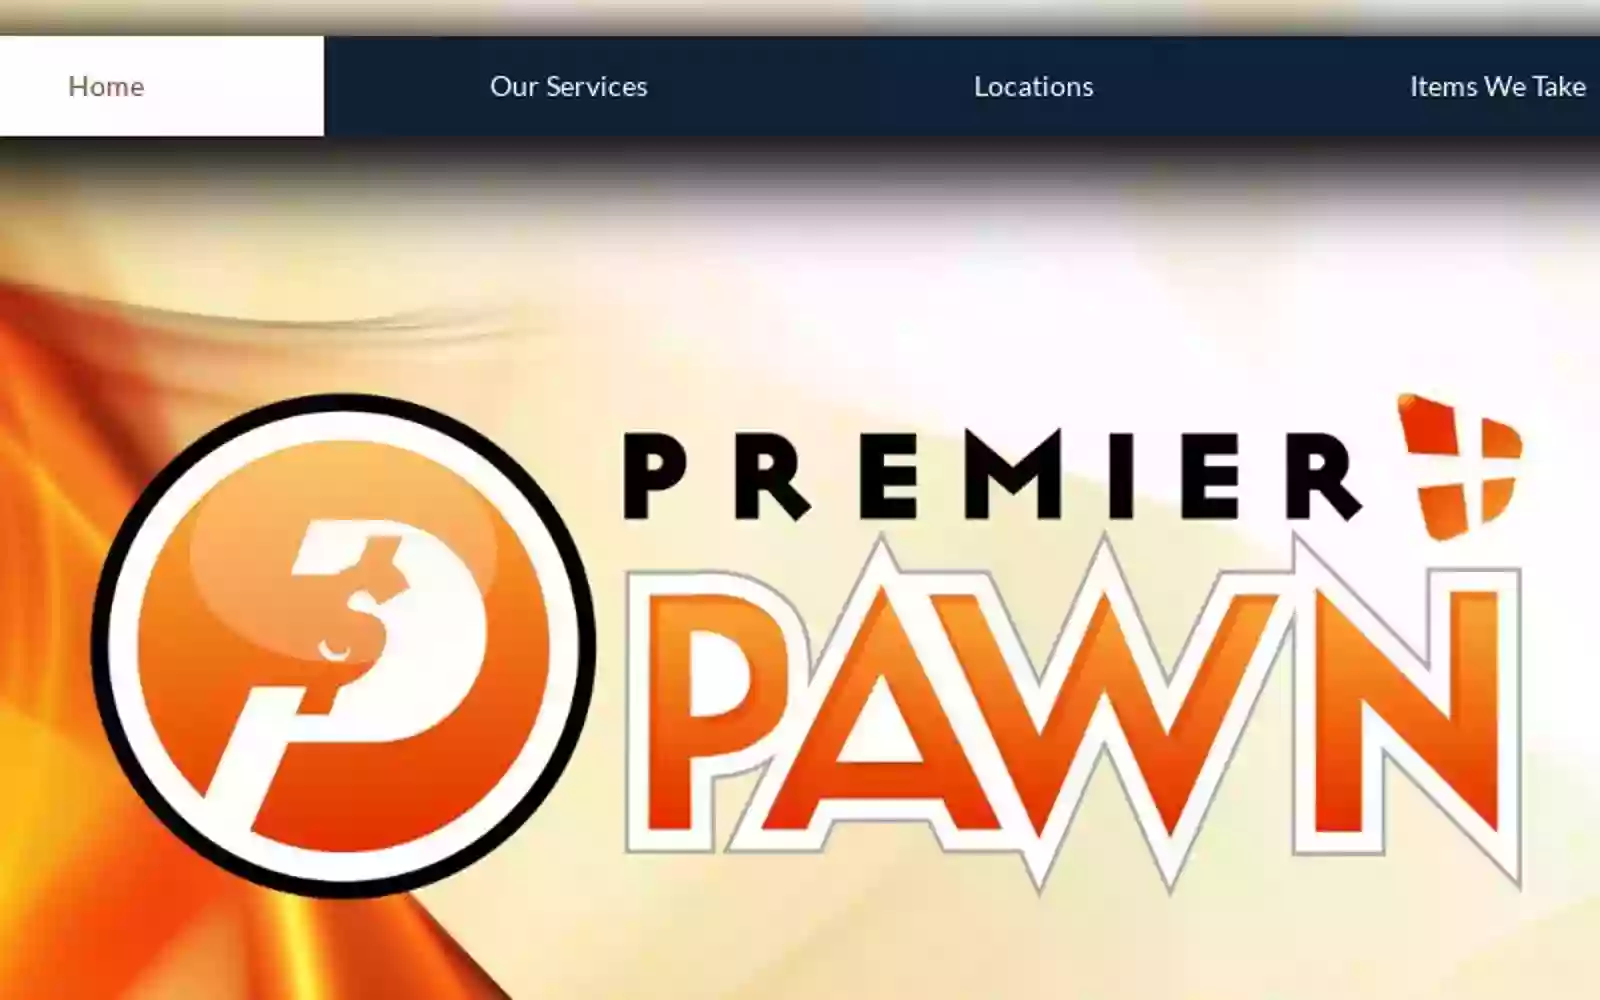 Premier Plus Pawn